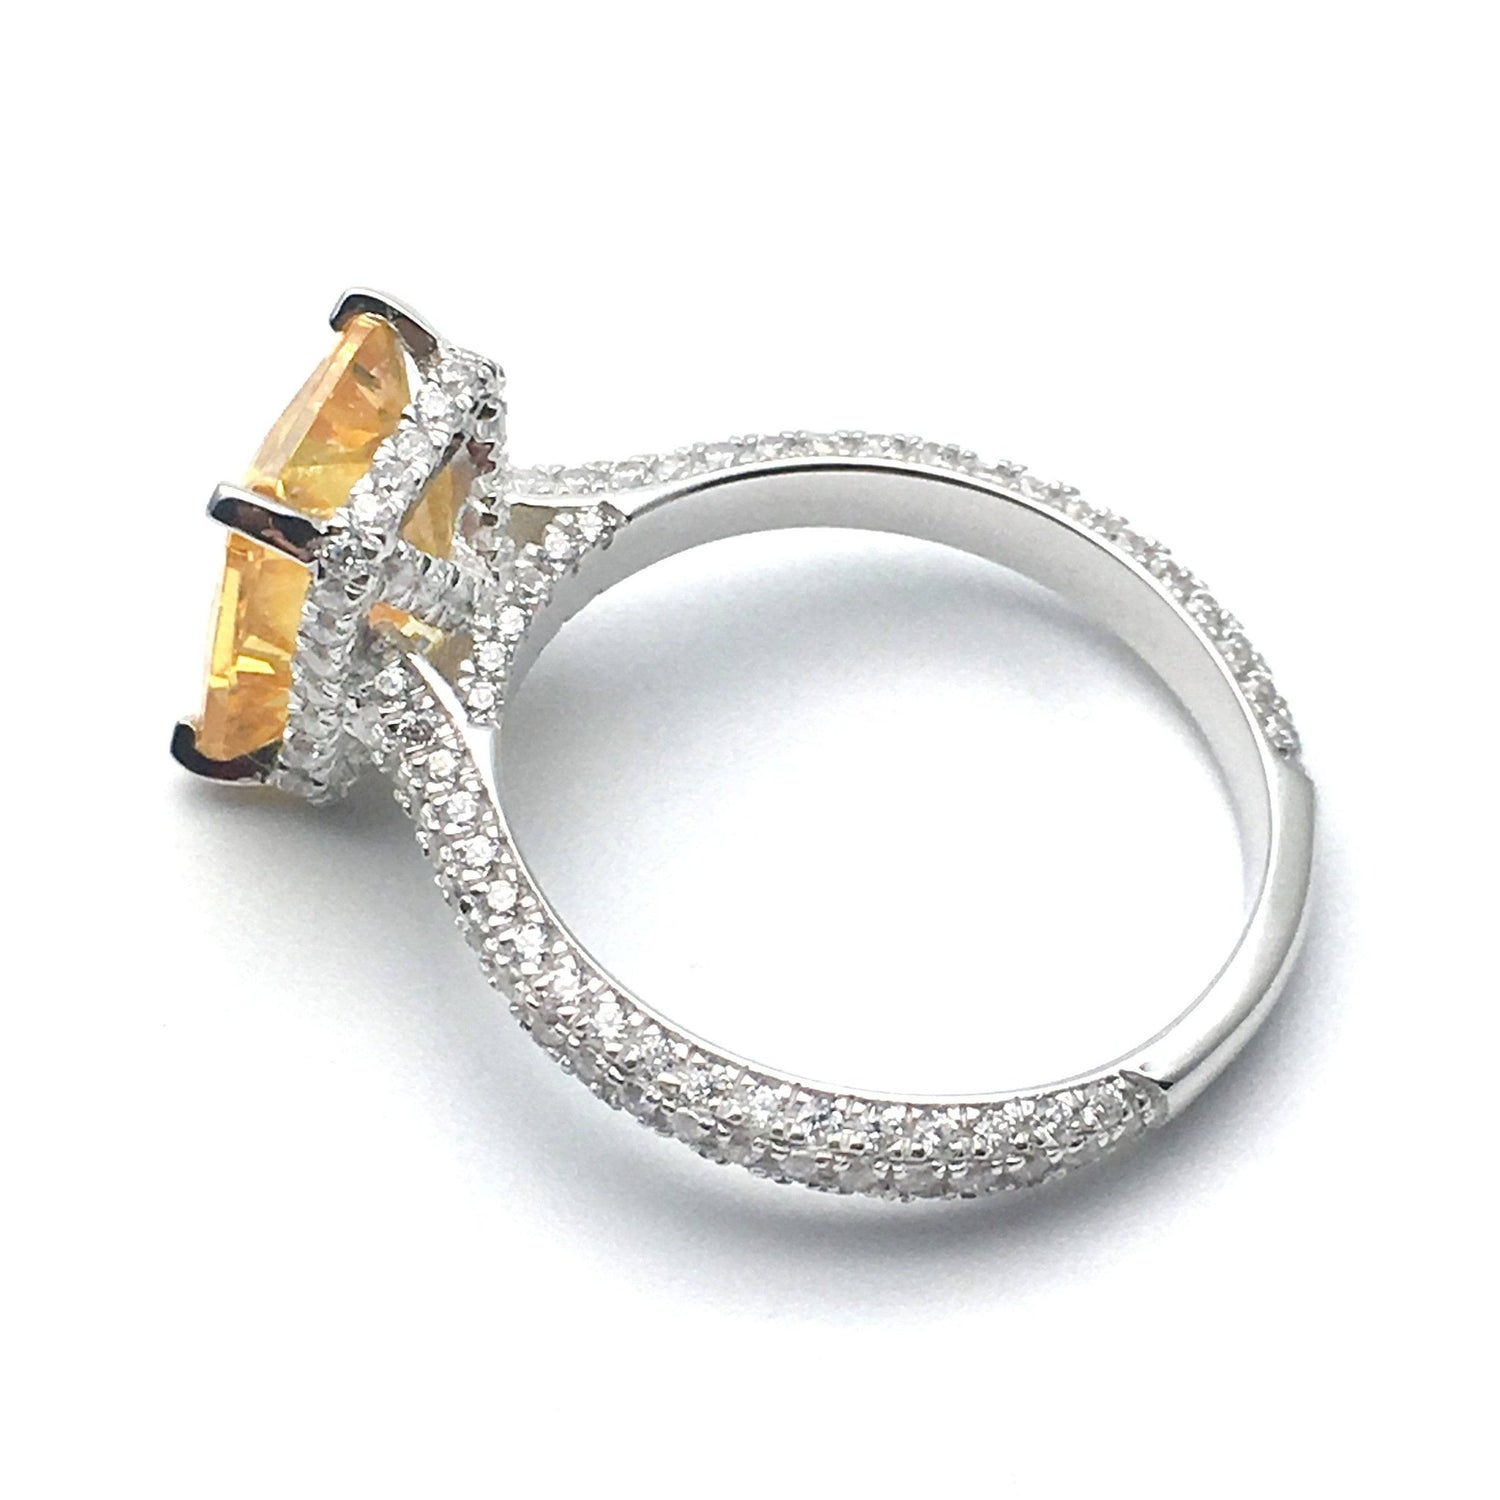 Emerald Cut Yellow Moissanite Engagement Ring - Black Diamonds New York